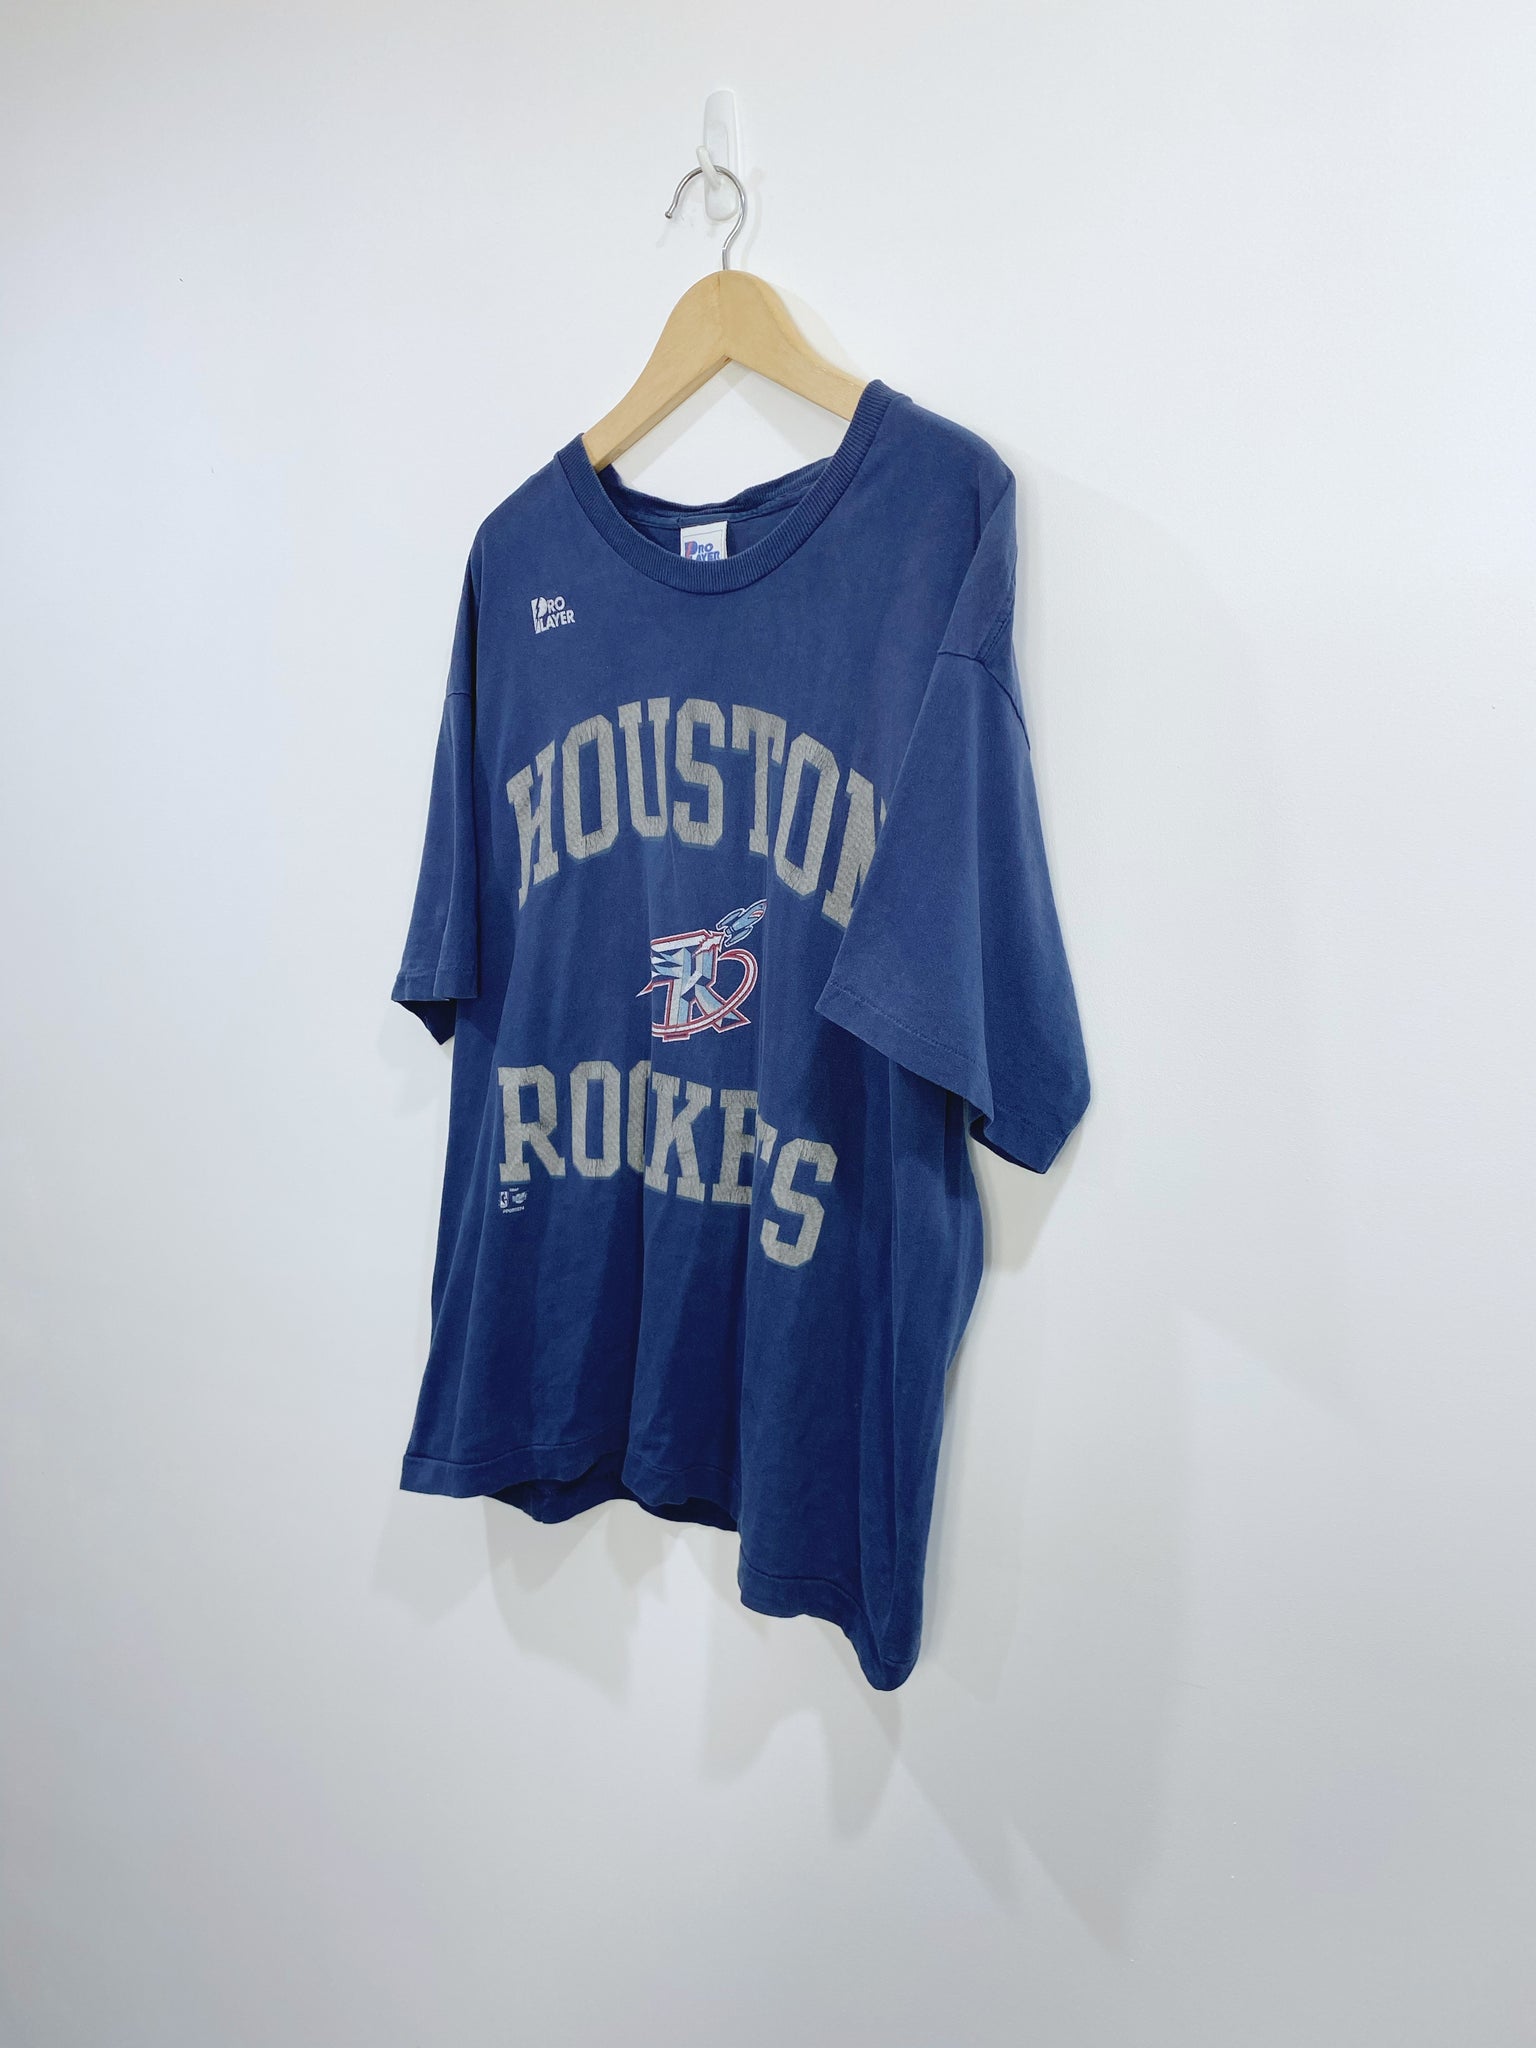 Vintage 90s Houston Rockets T-shirt XL